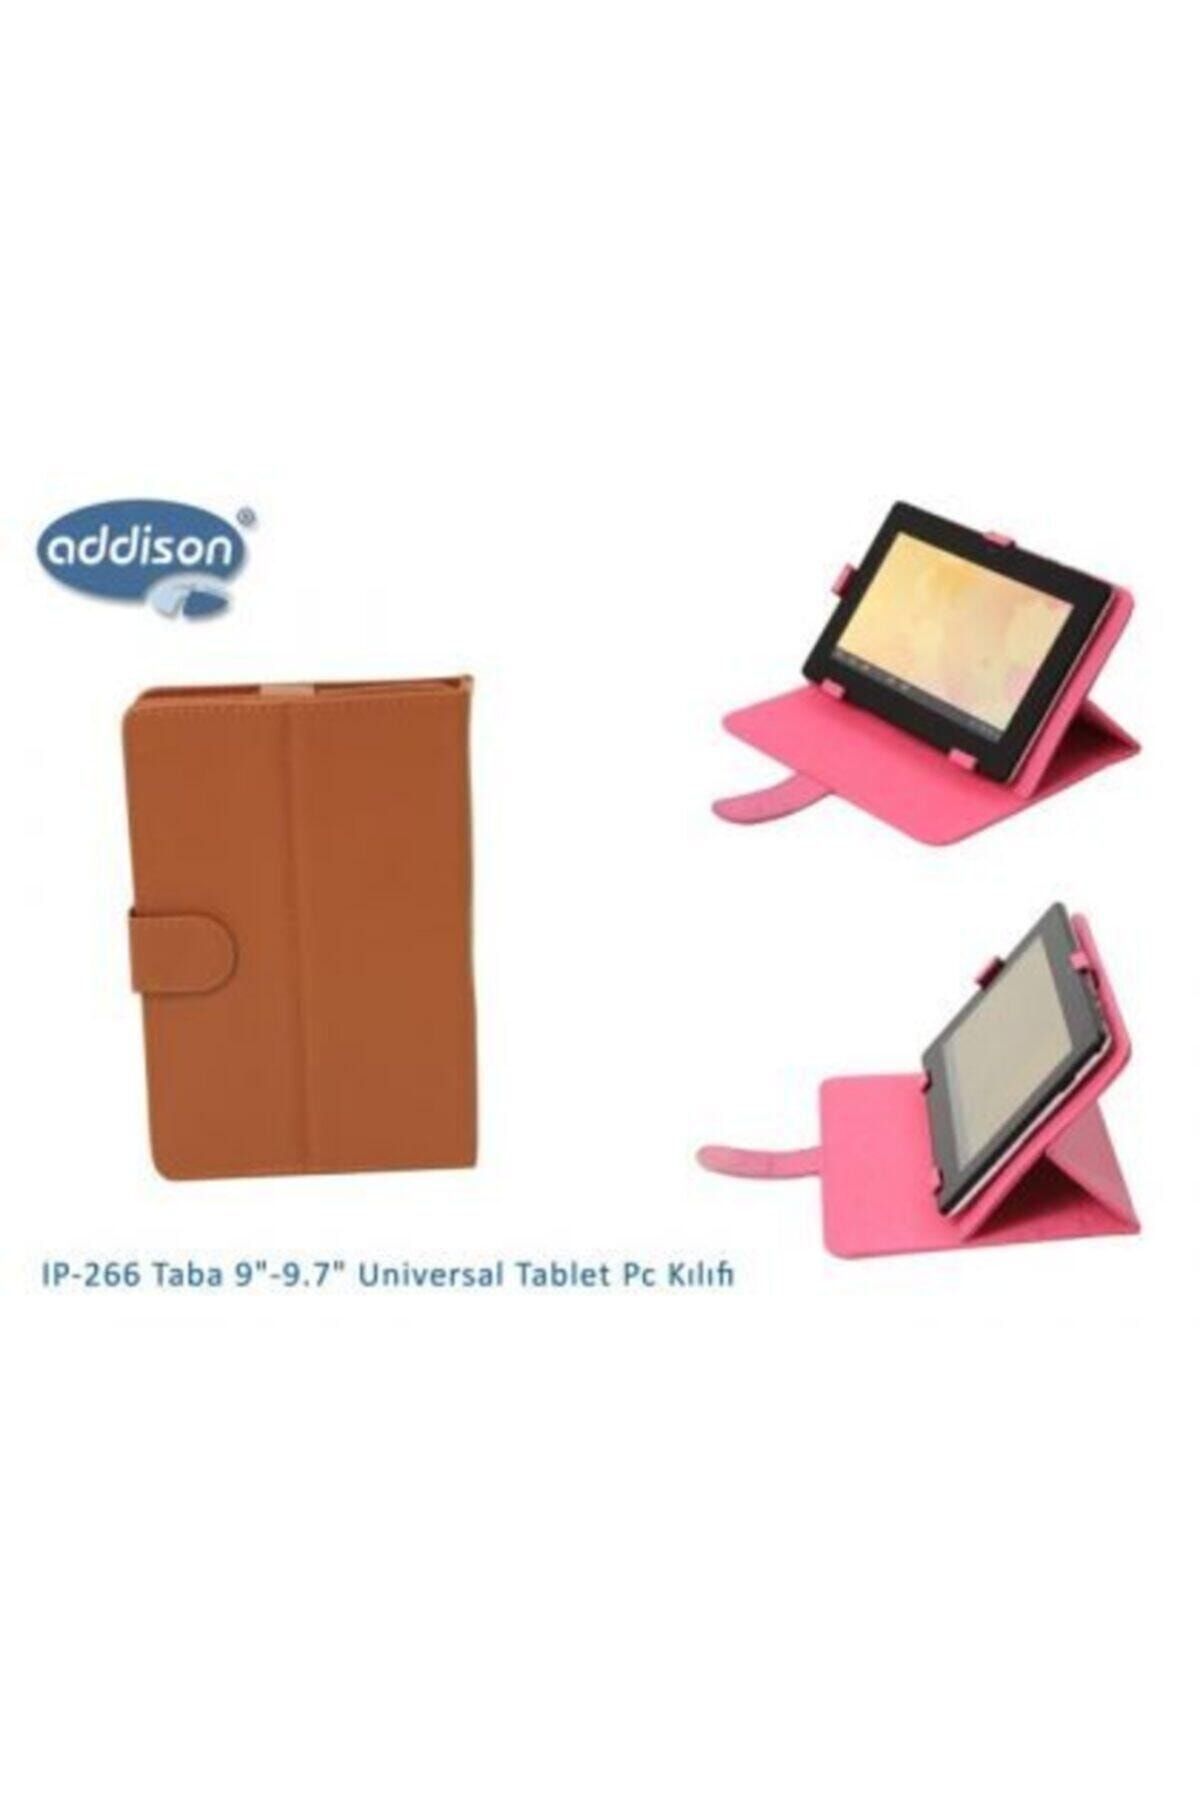 Addison Ip-266 Taba 9"-9.7" Universal Tablet Pc Kılıfı